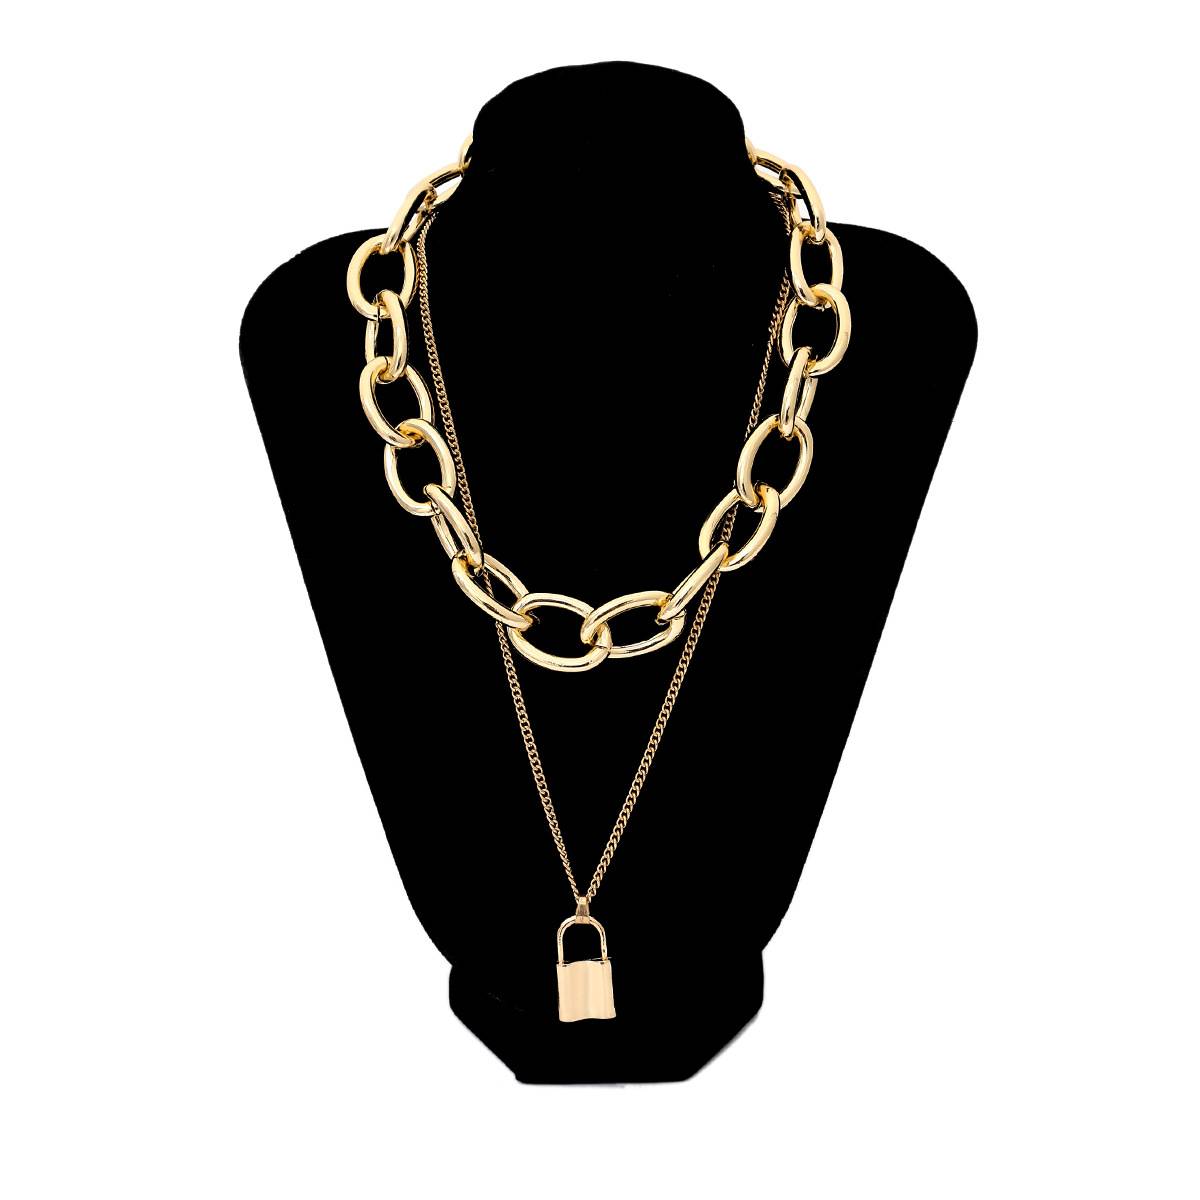 shop for necklaces online